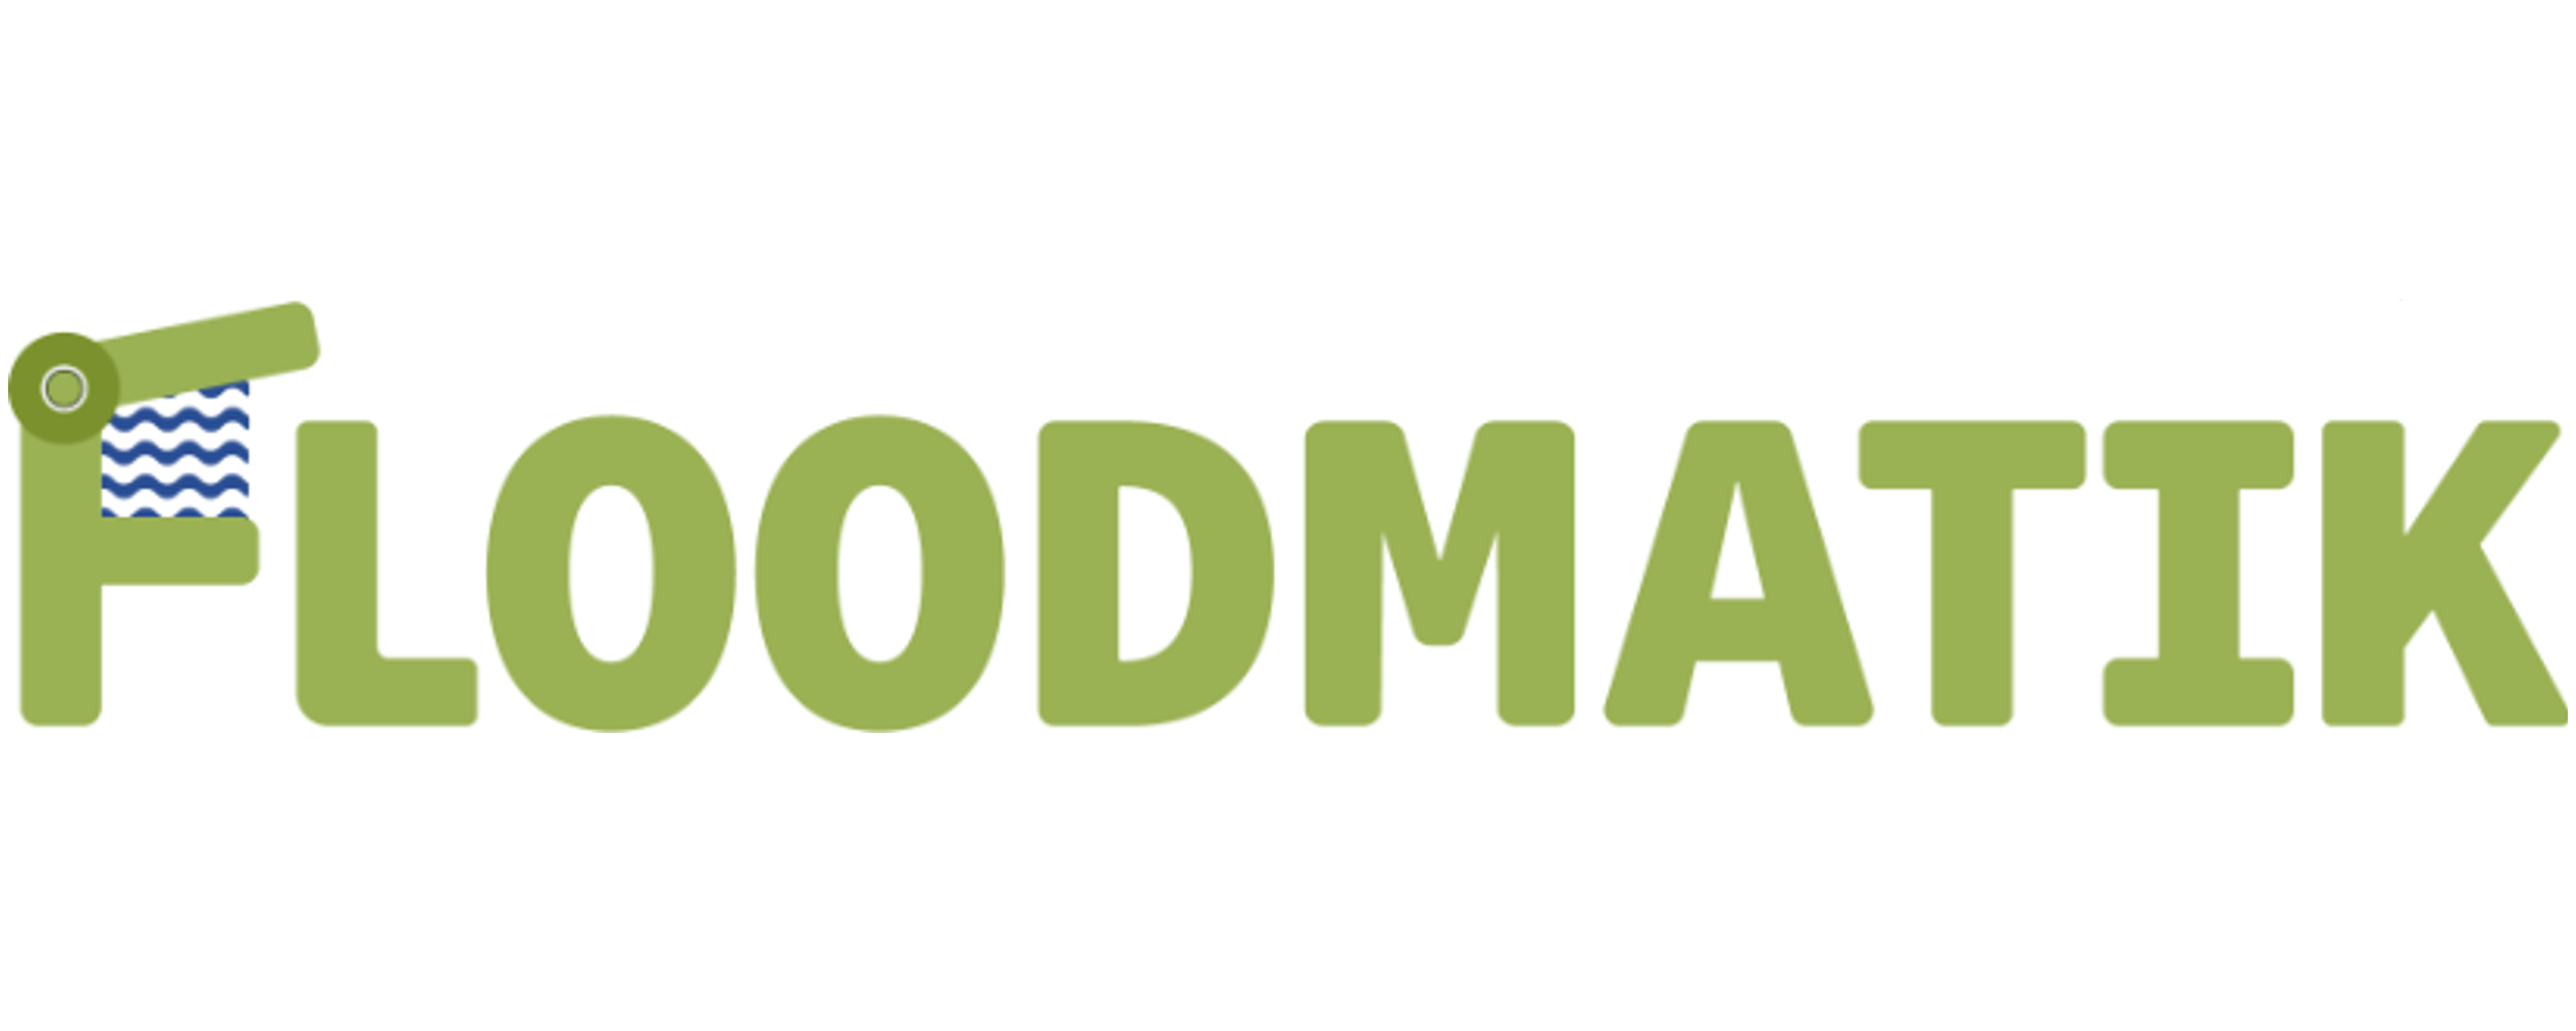 Floodmatik logo landscape